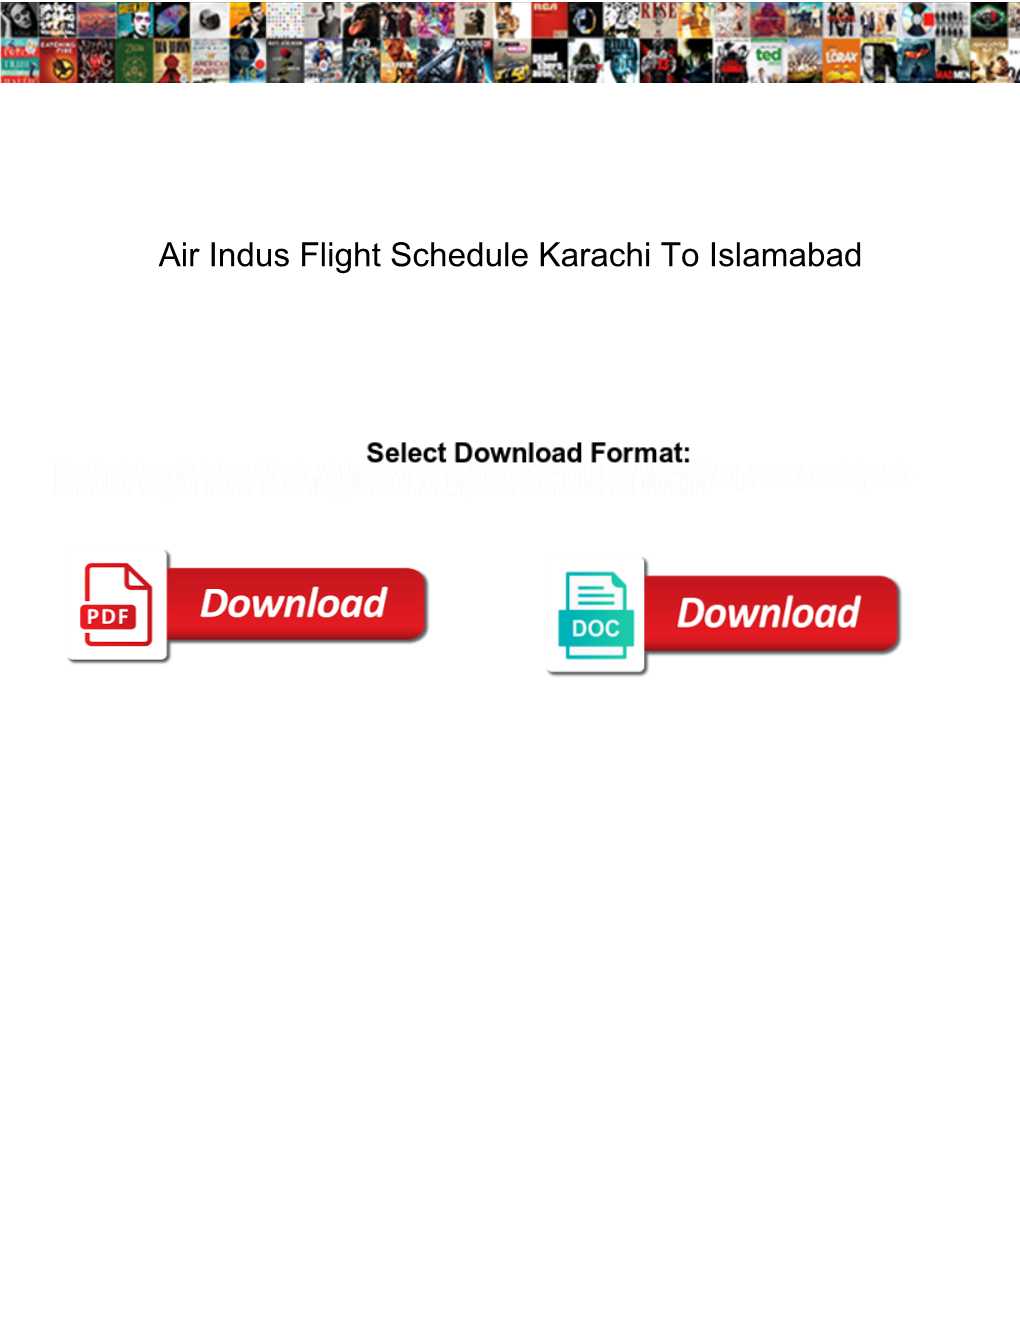 Air Indus Flight Schedule Karachi to Islamabad